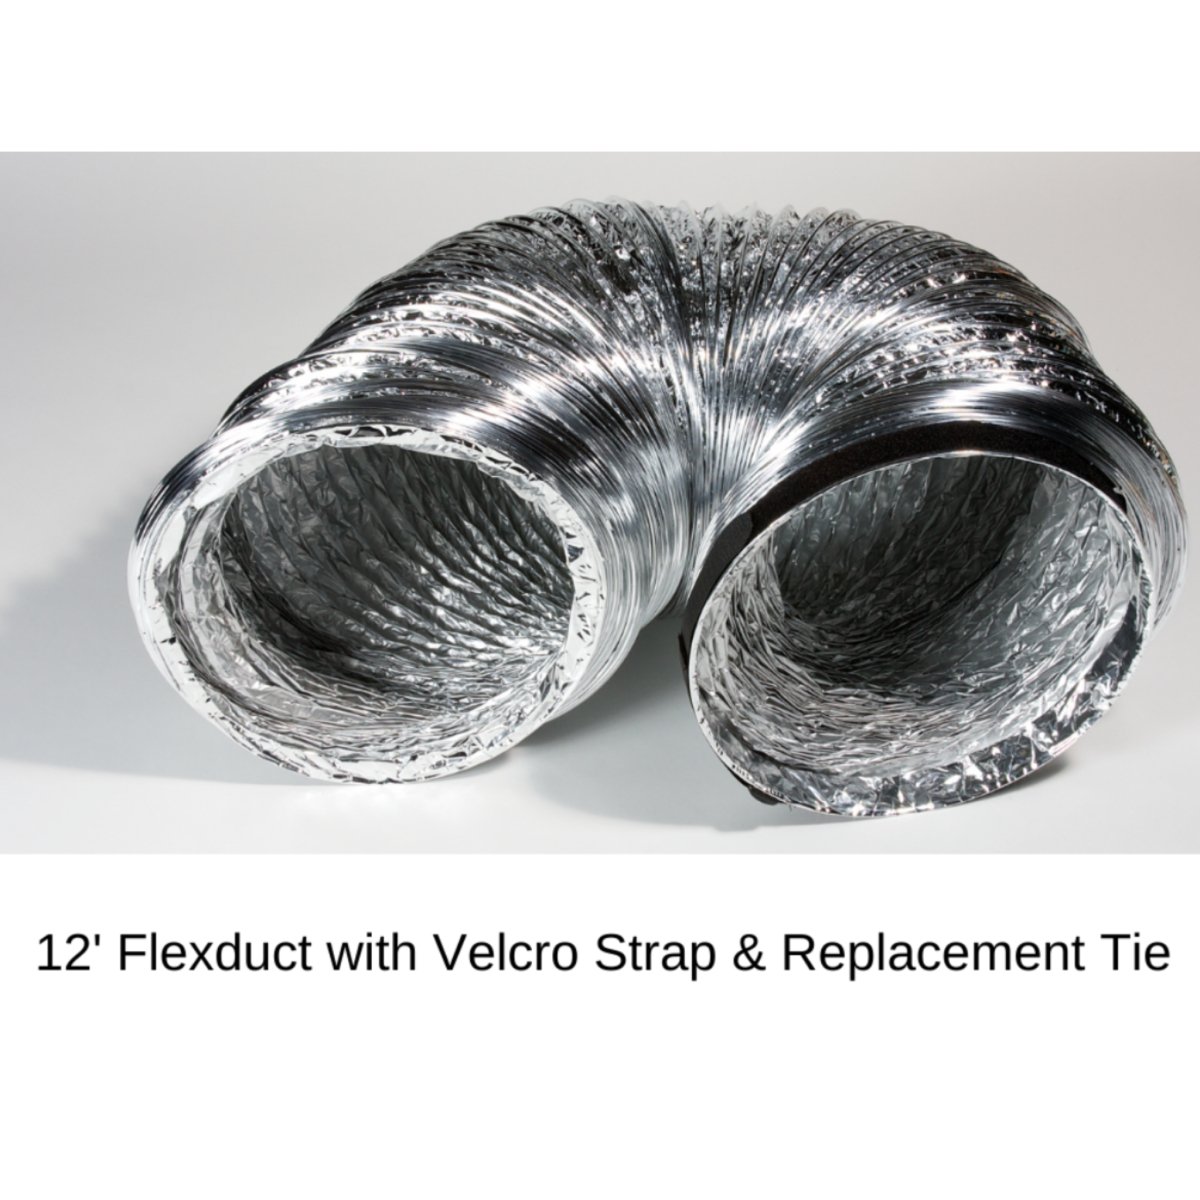 Replacement Flex Duct w/ Velcro Strap (12') – Vent Cap Systems